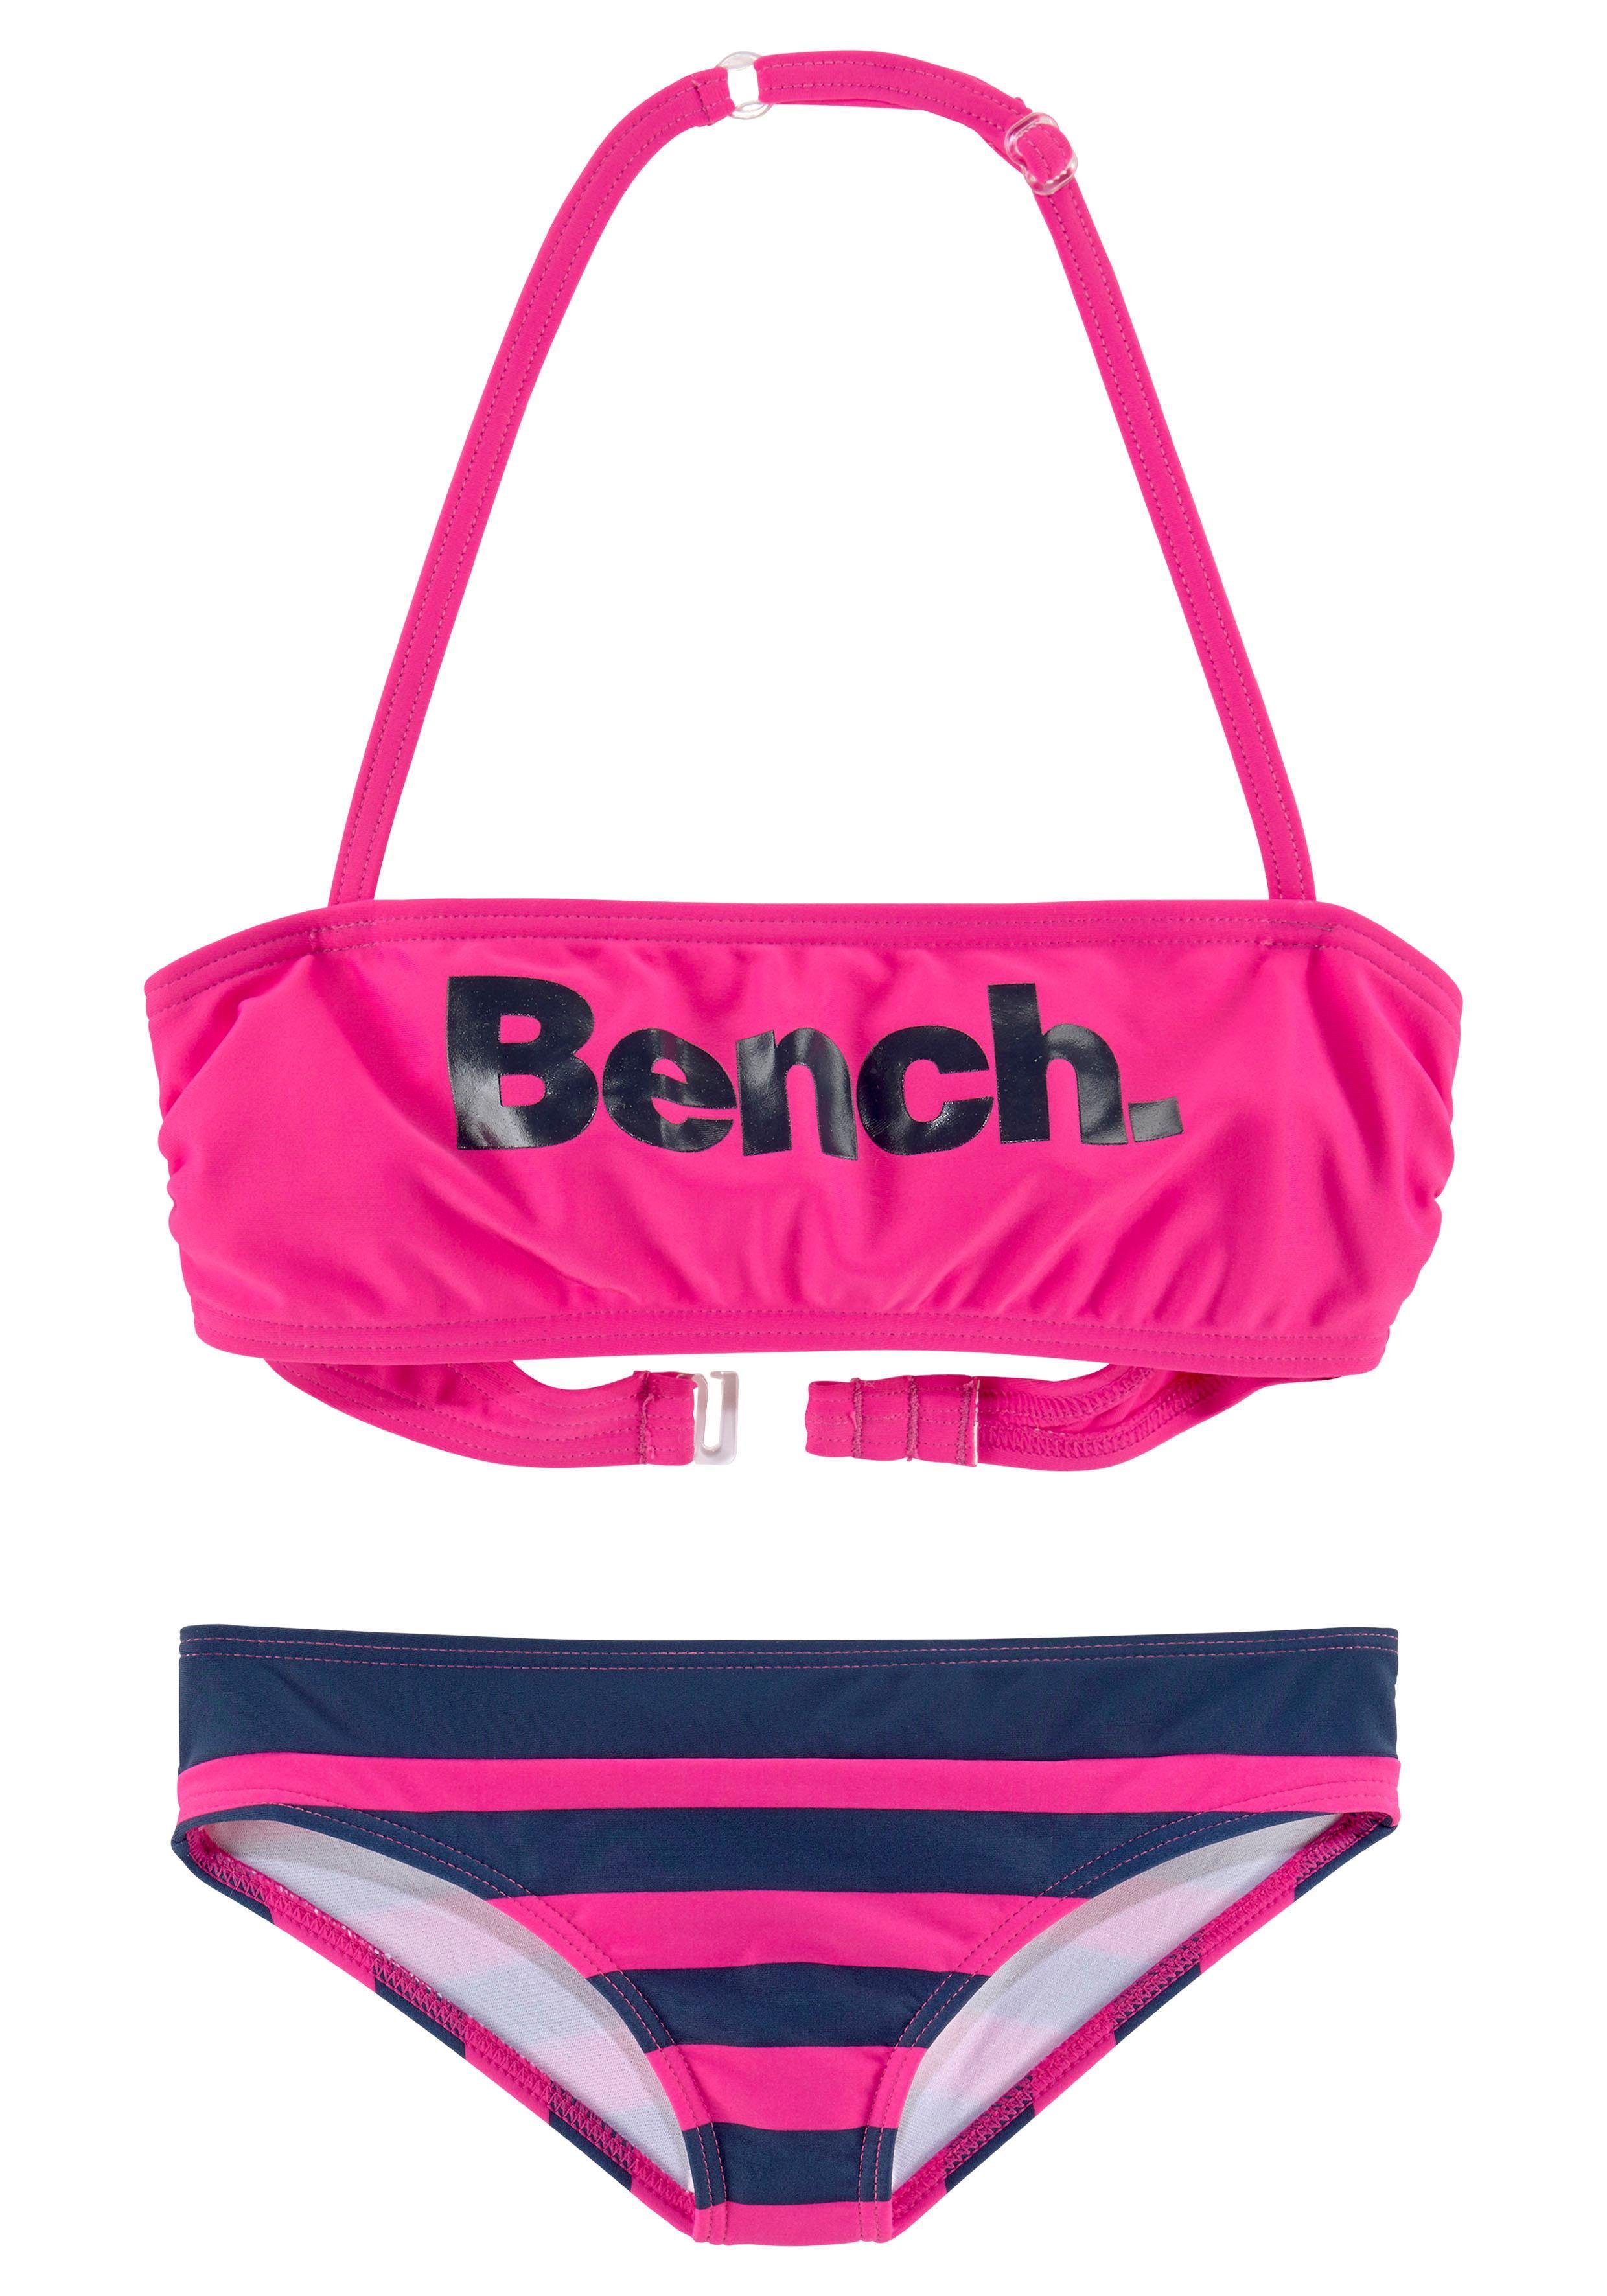 Bench. Bandeau-Bikini Logoprint mit pink-marine großem